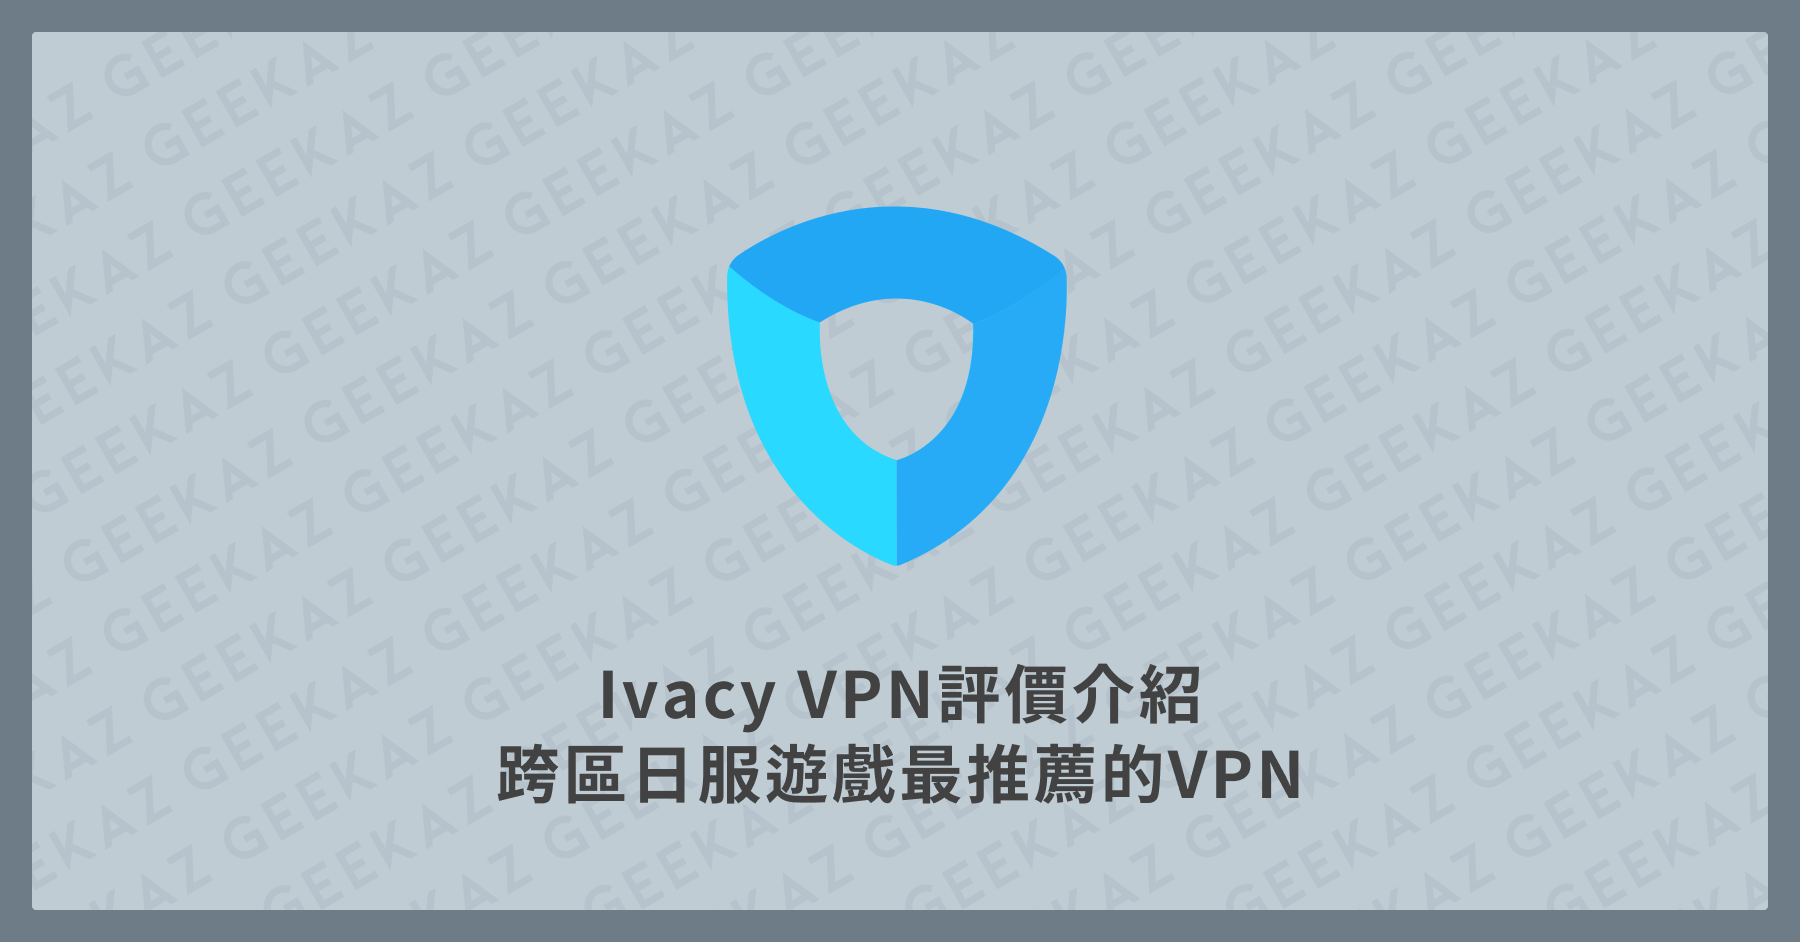 Ivacy VPN 評價介紹